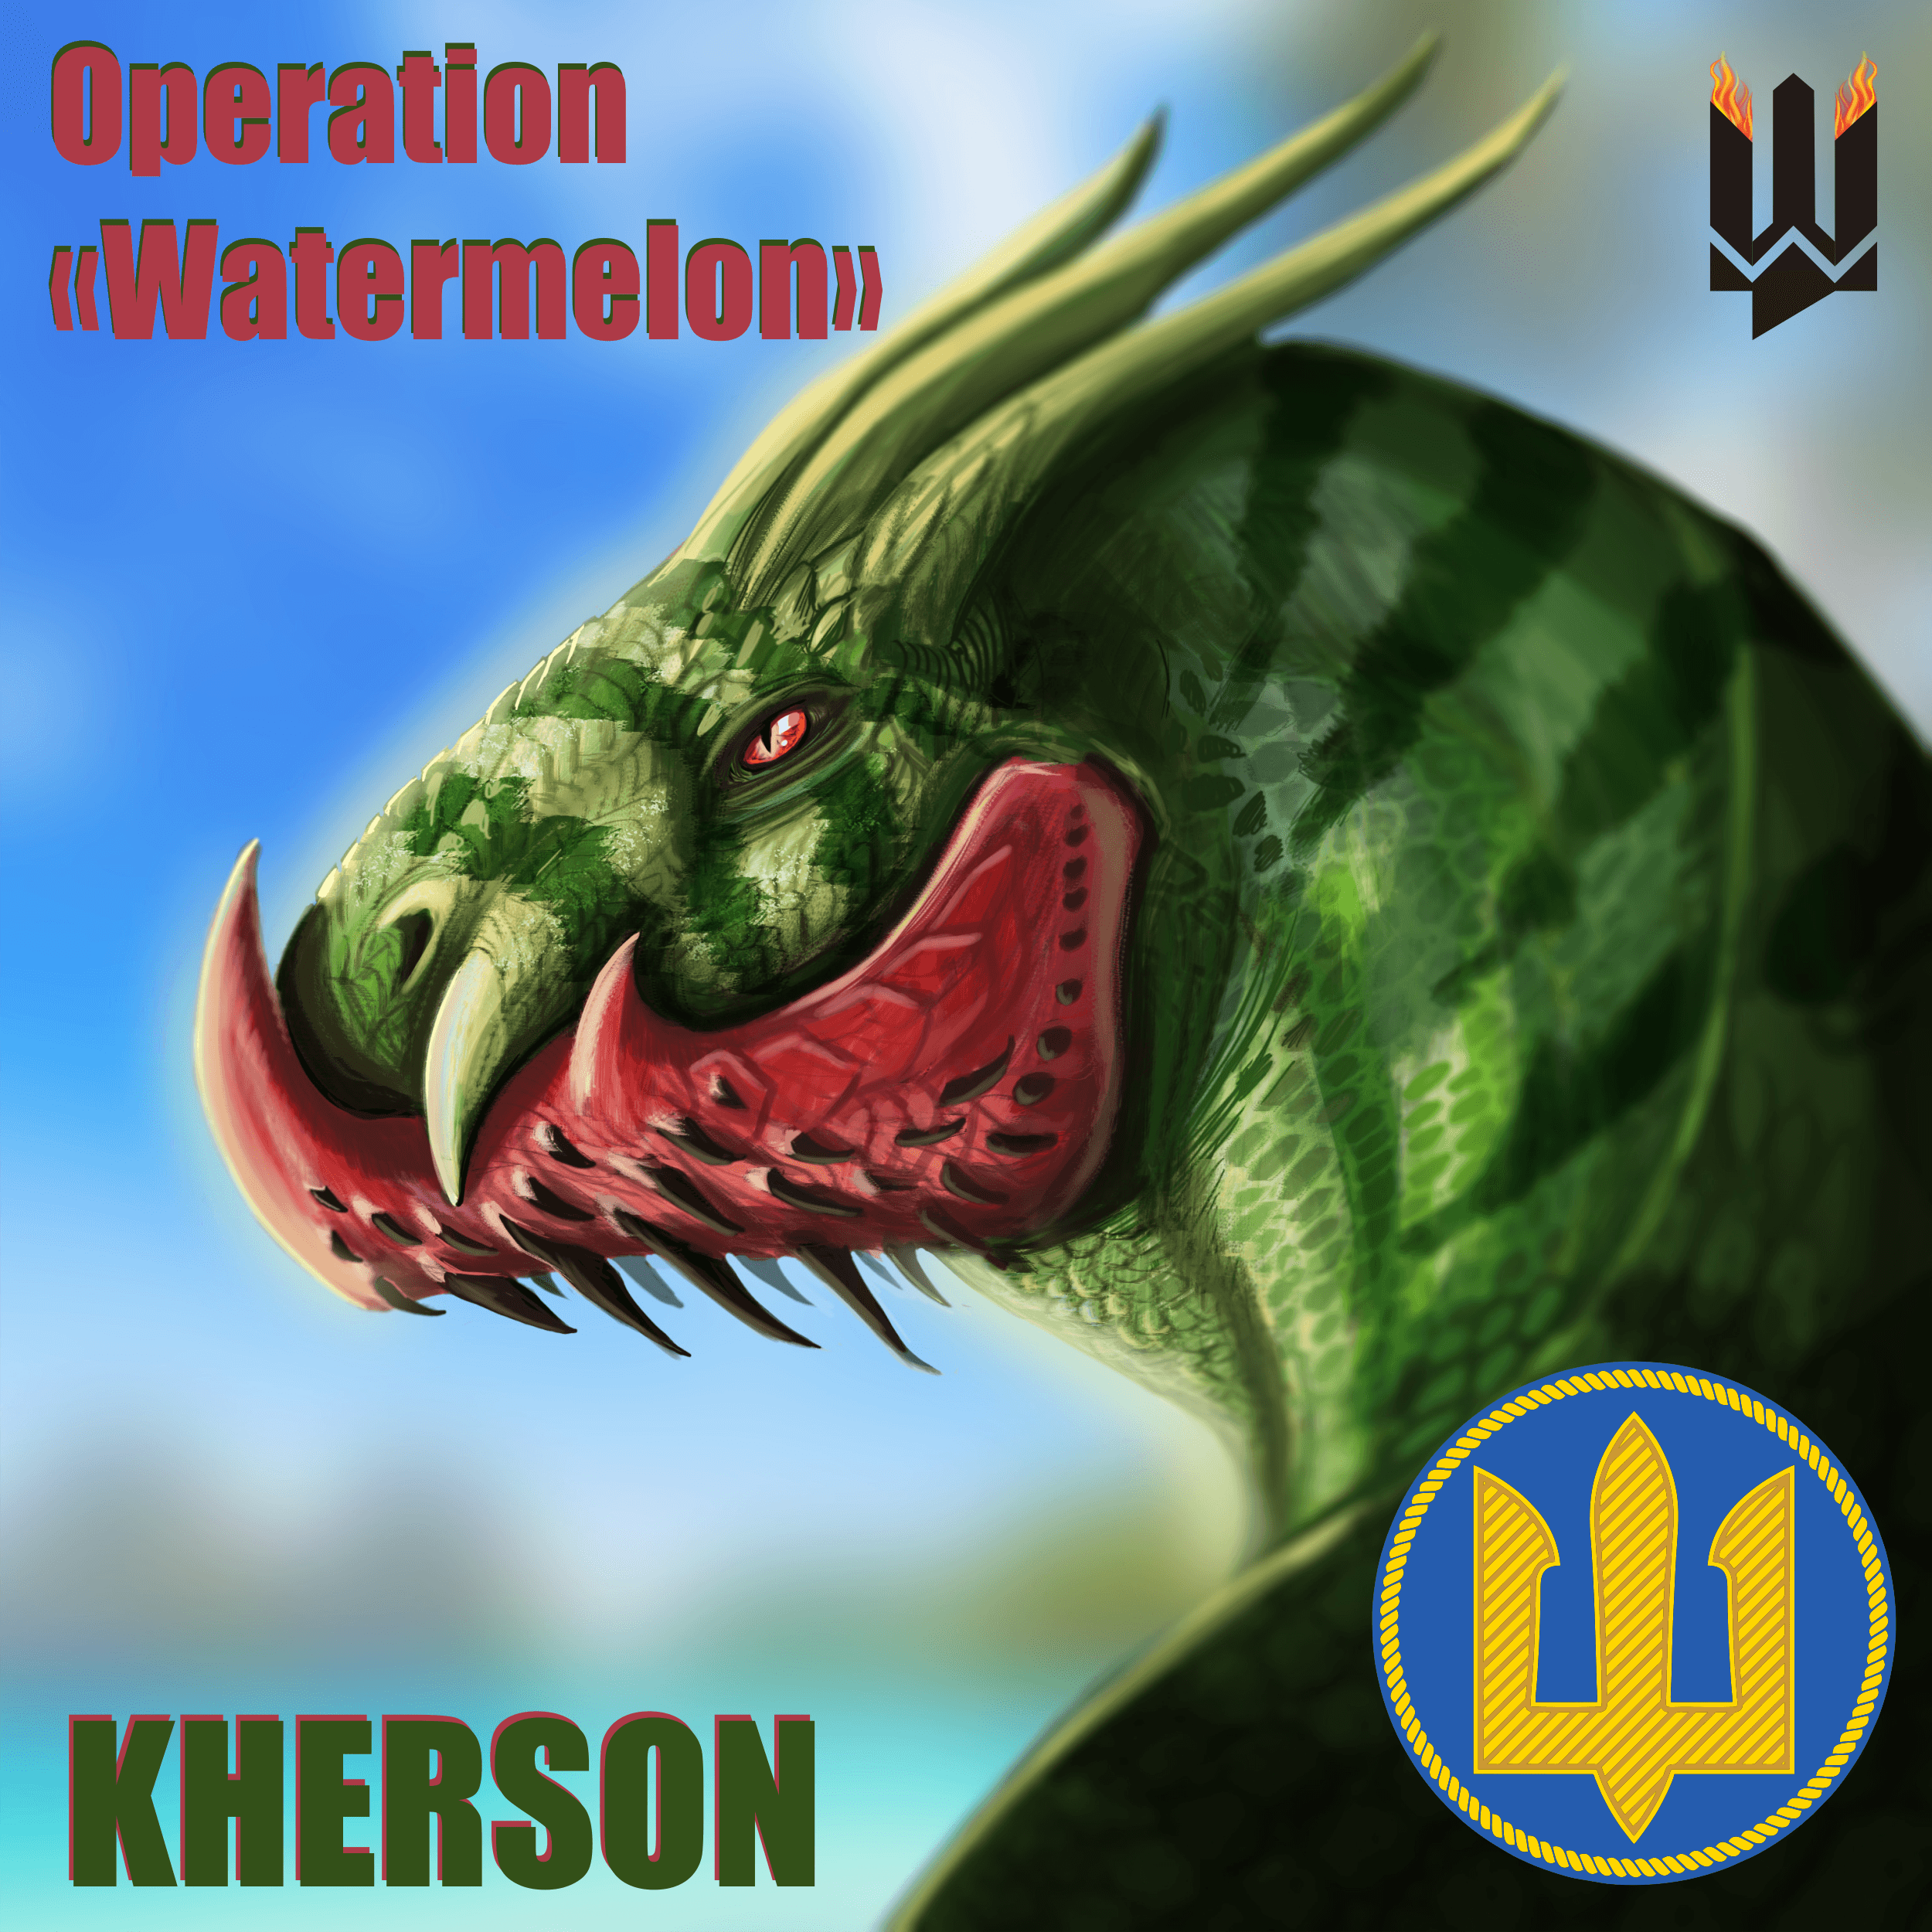 KHERSON - Operation "Watermelon"